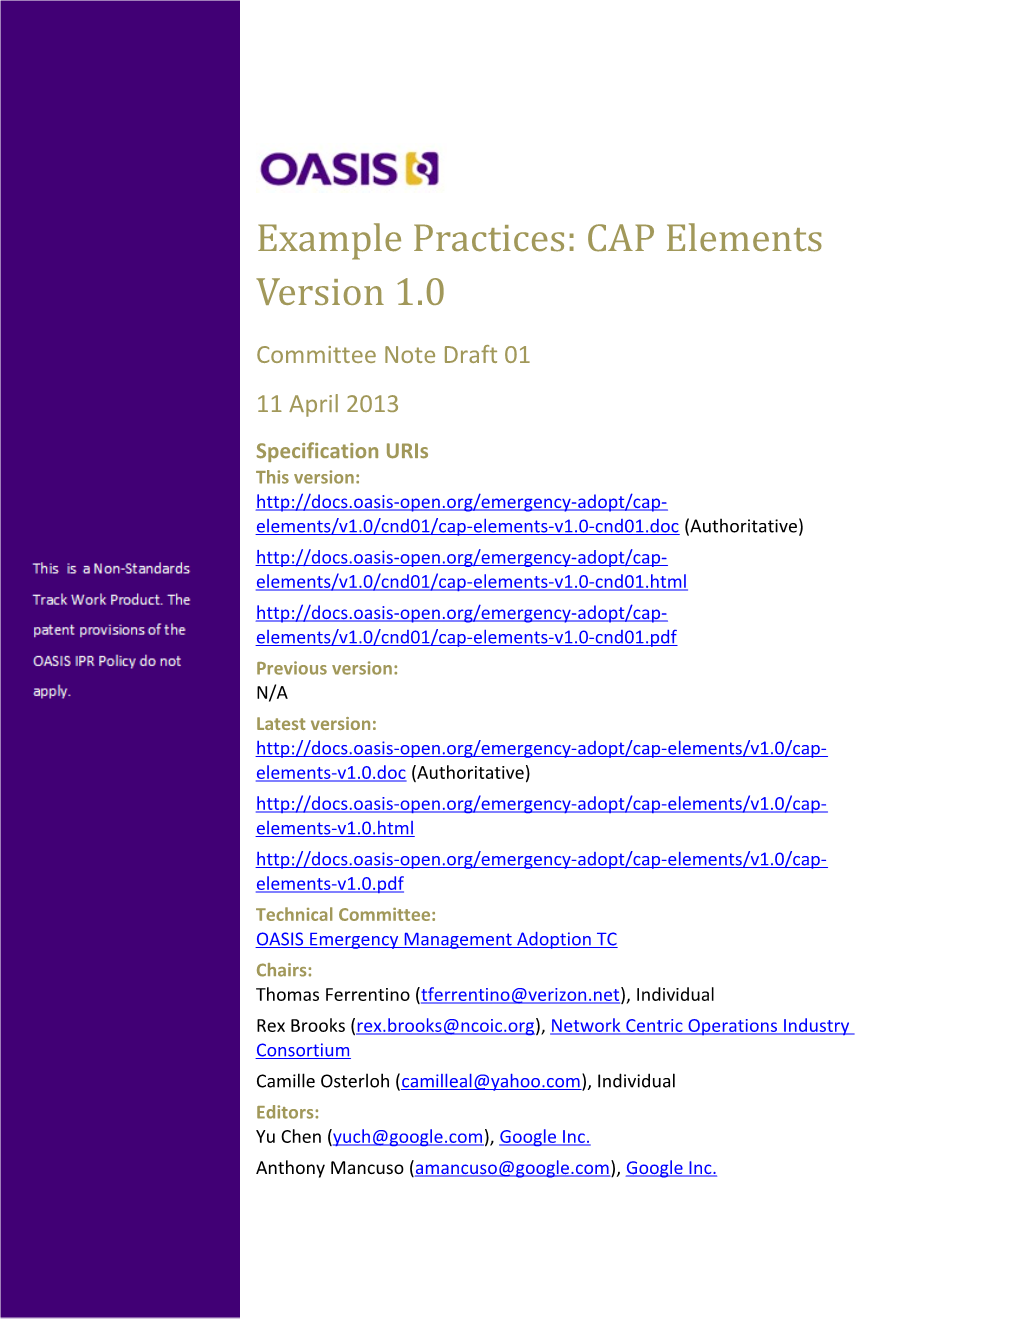 Example Practices: CAP Elements Version 1.0